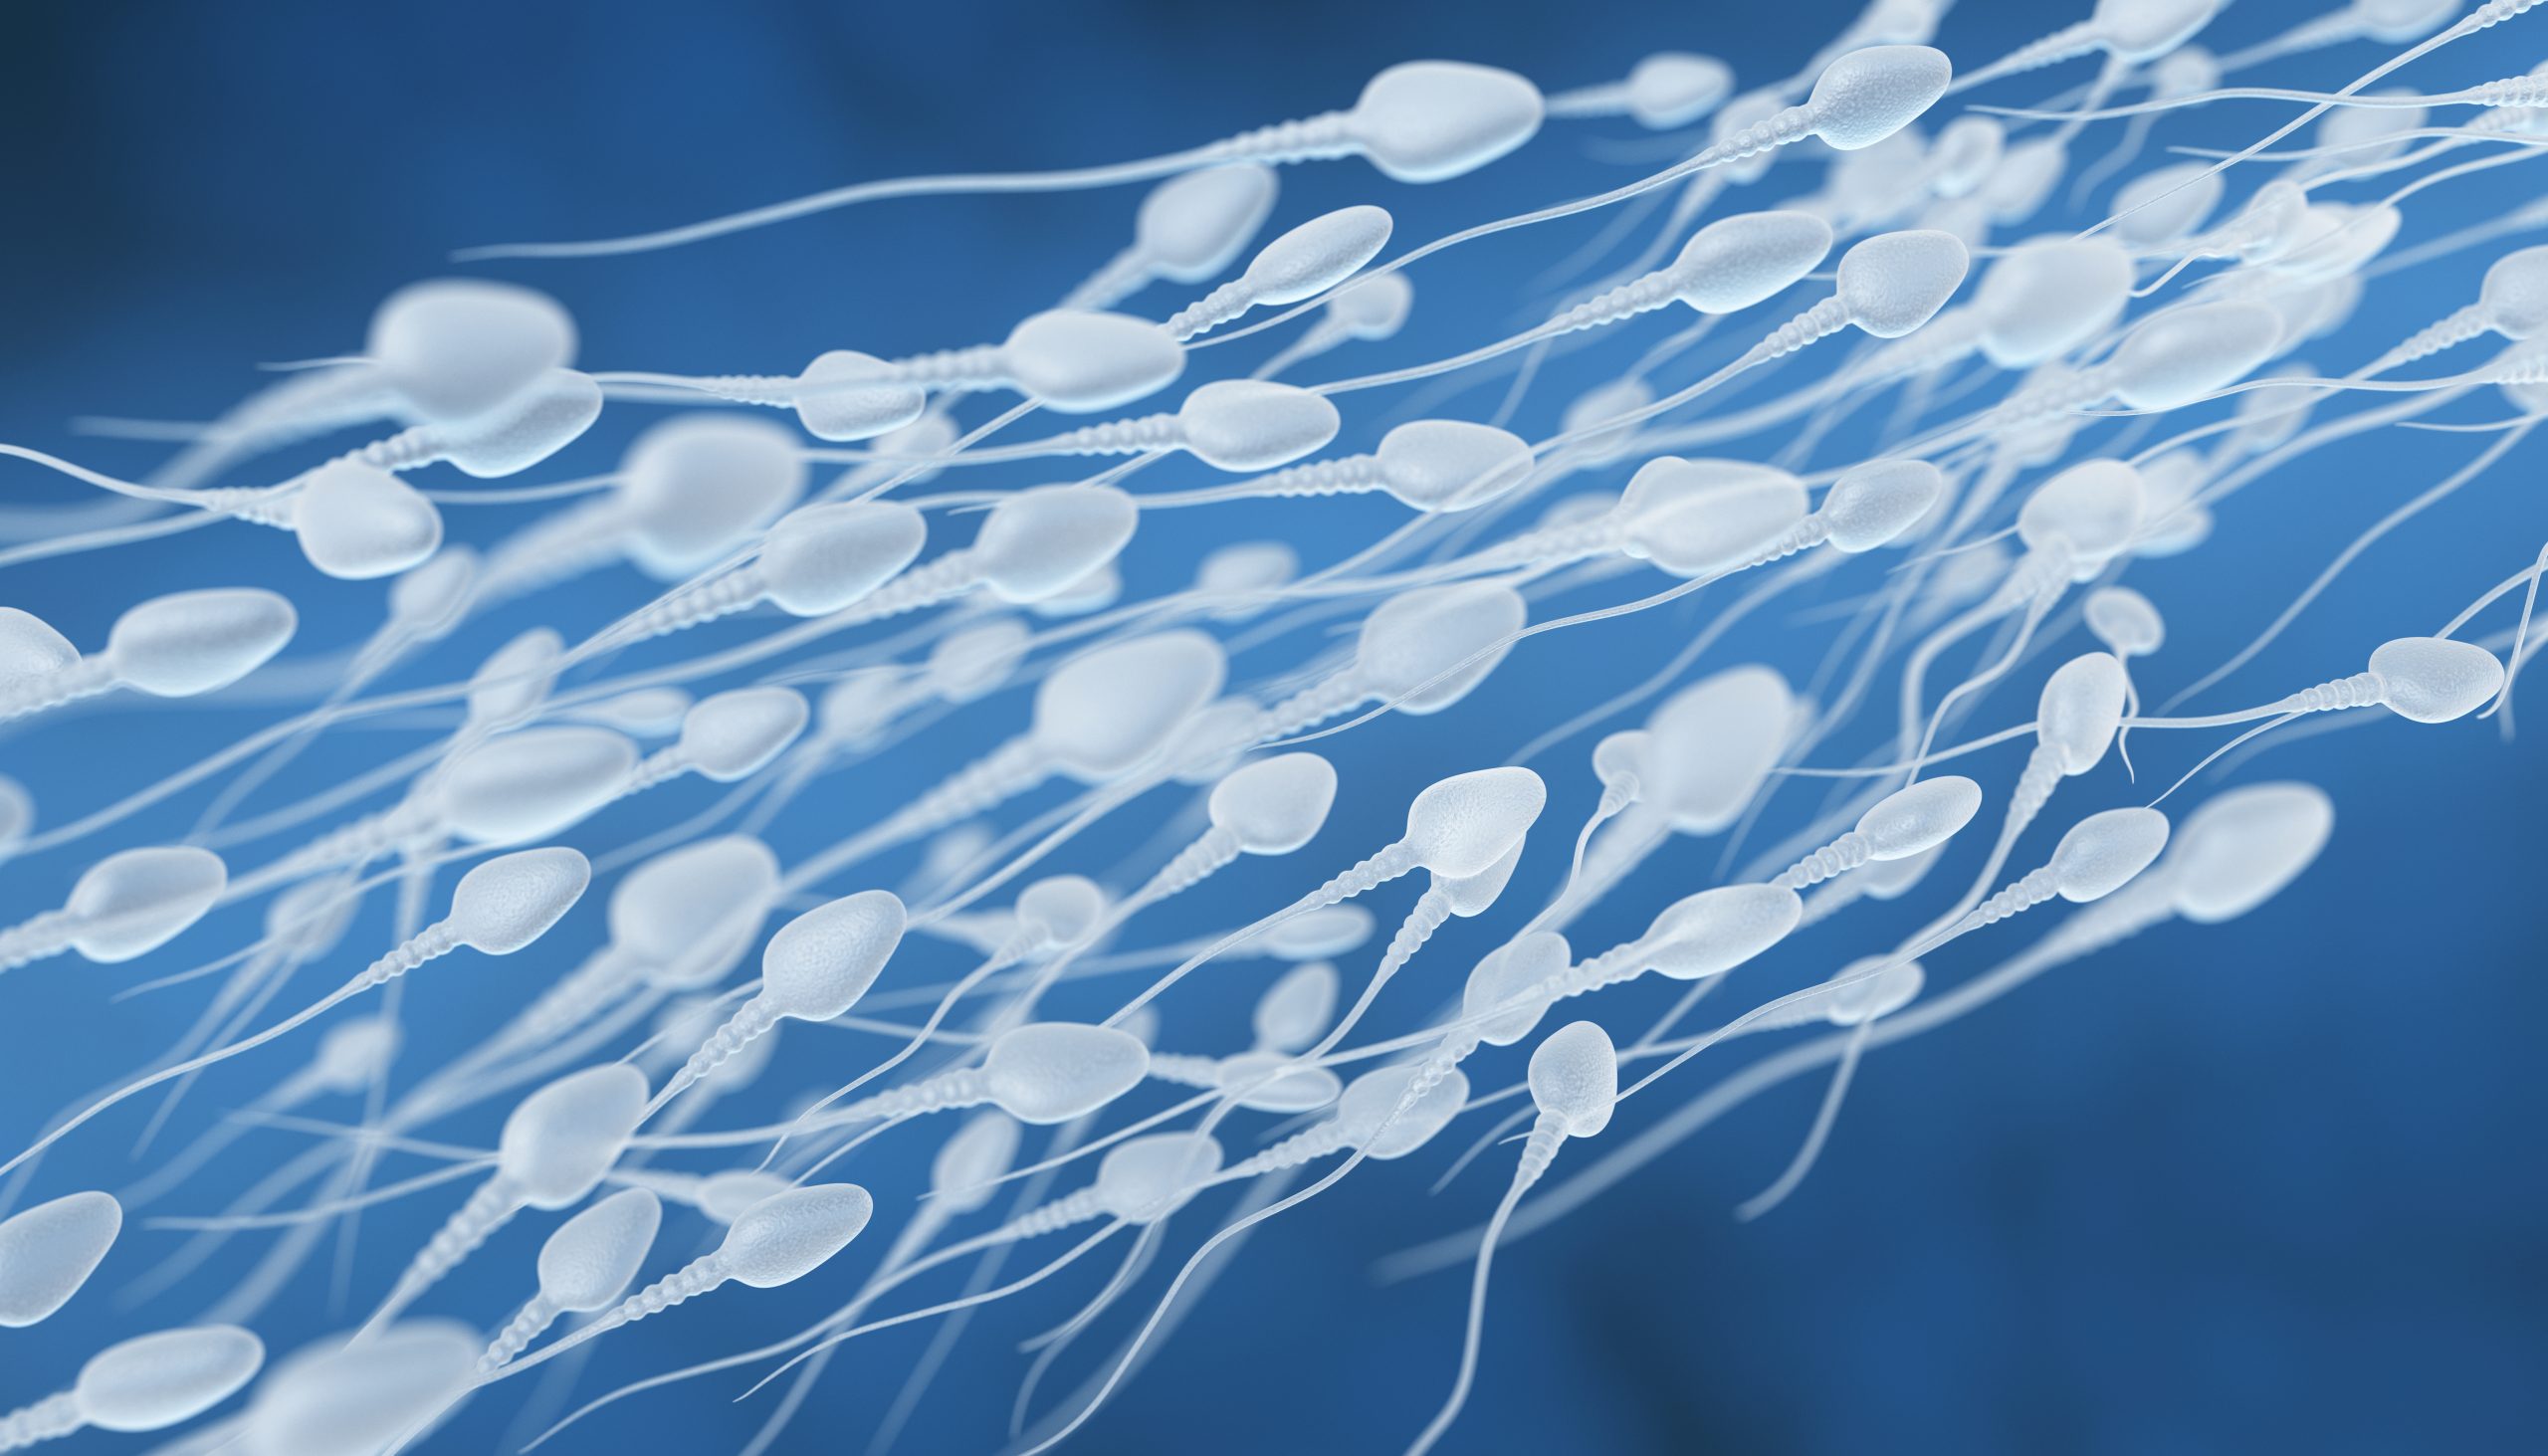 Sperm cells flowing